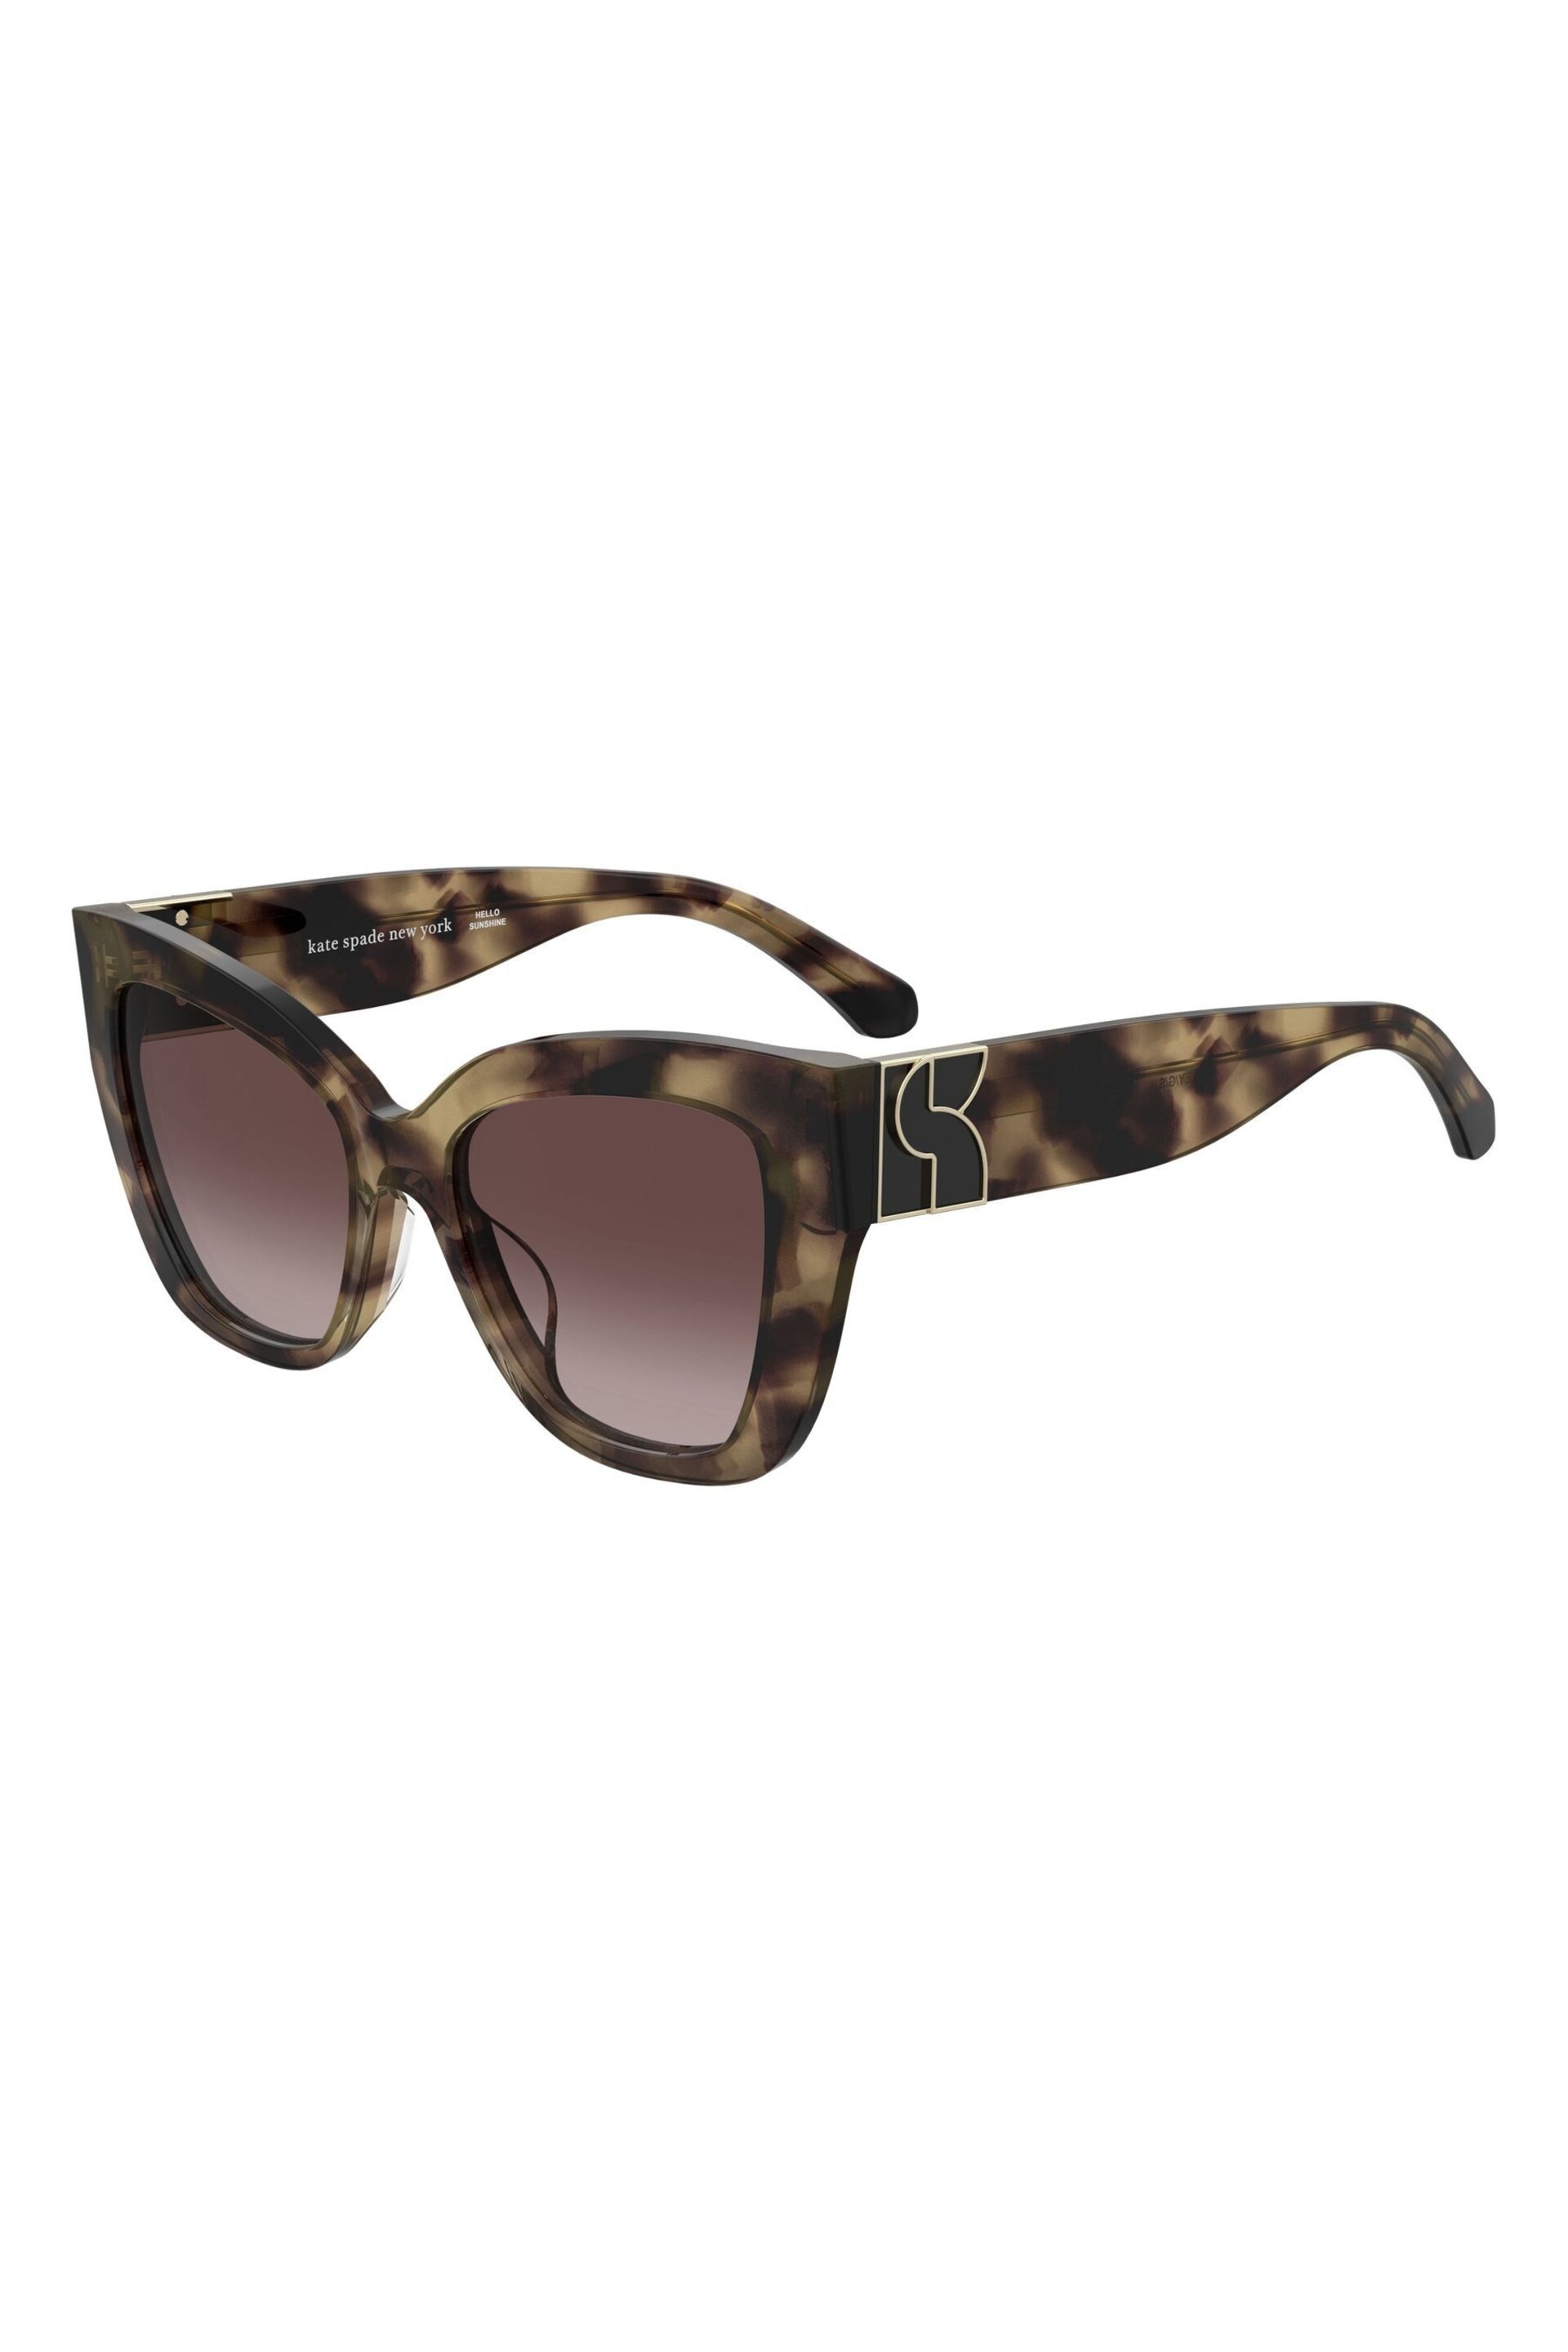 kate spade new york Bexley/G/S Cat Eye Brown Sunglasses - Image 1 of 1